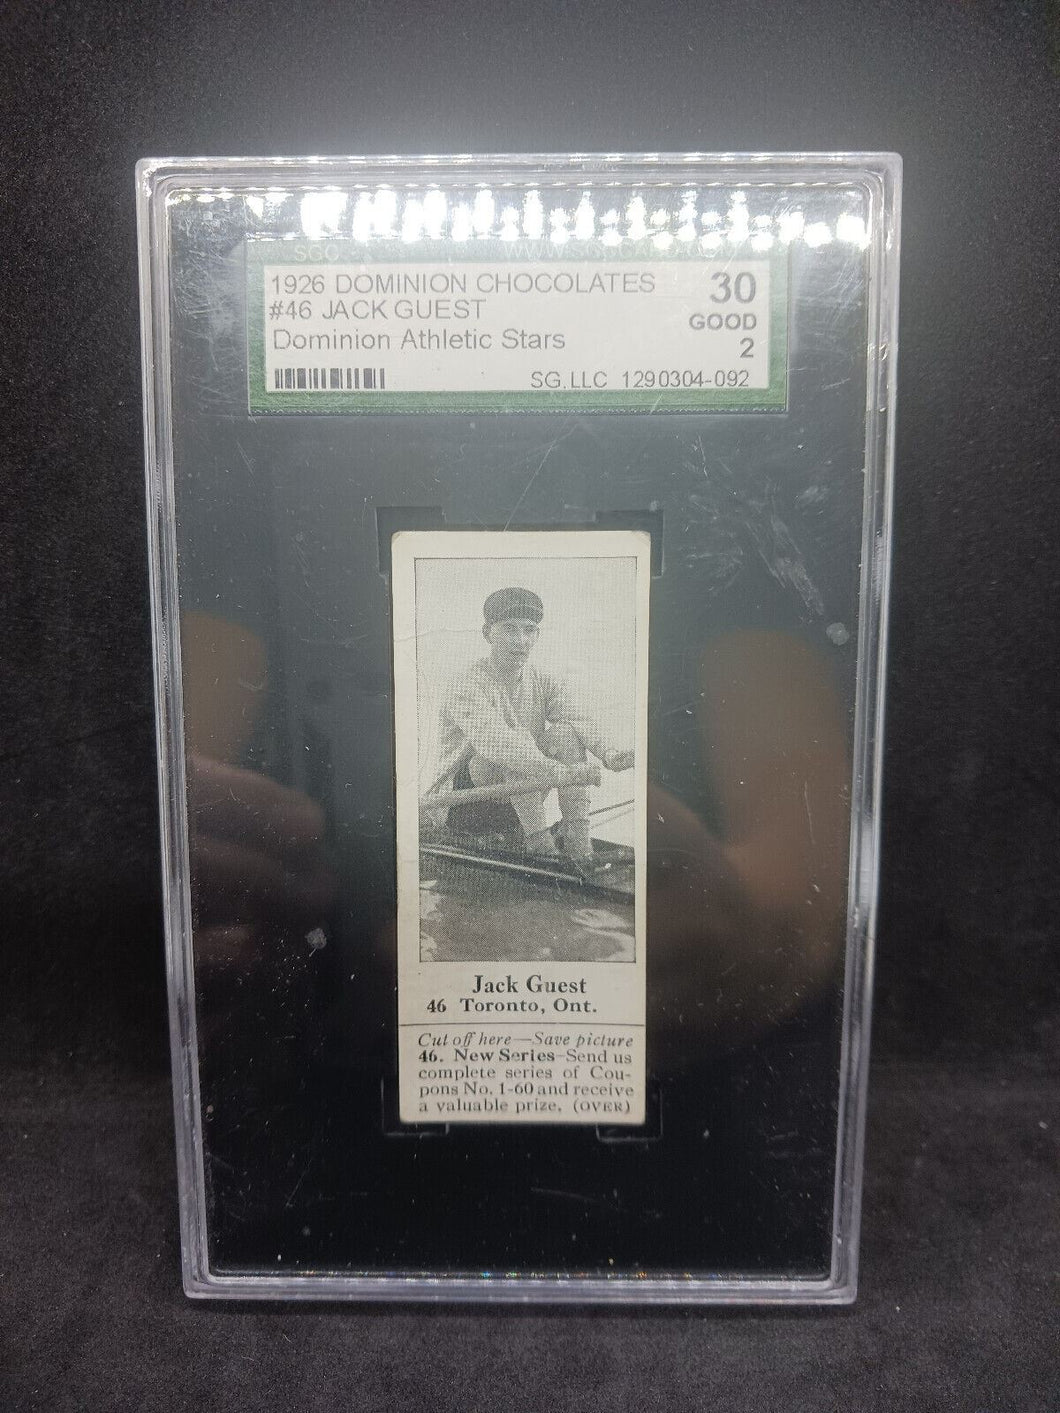 1926 Dominion Chocolates Graded Card – #46 Jack Guest SGC 30 GOOD 2